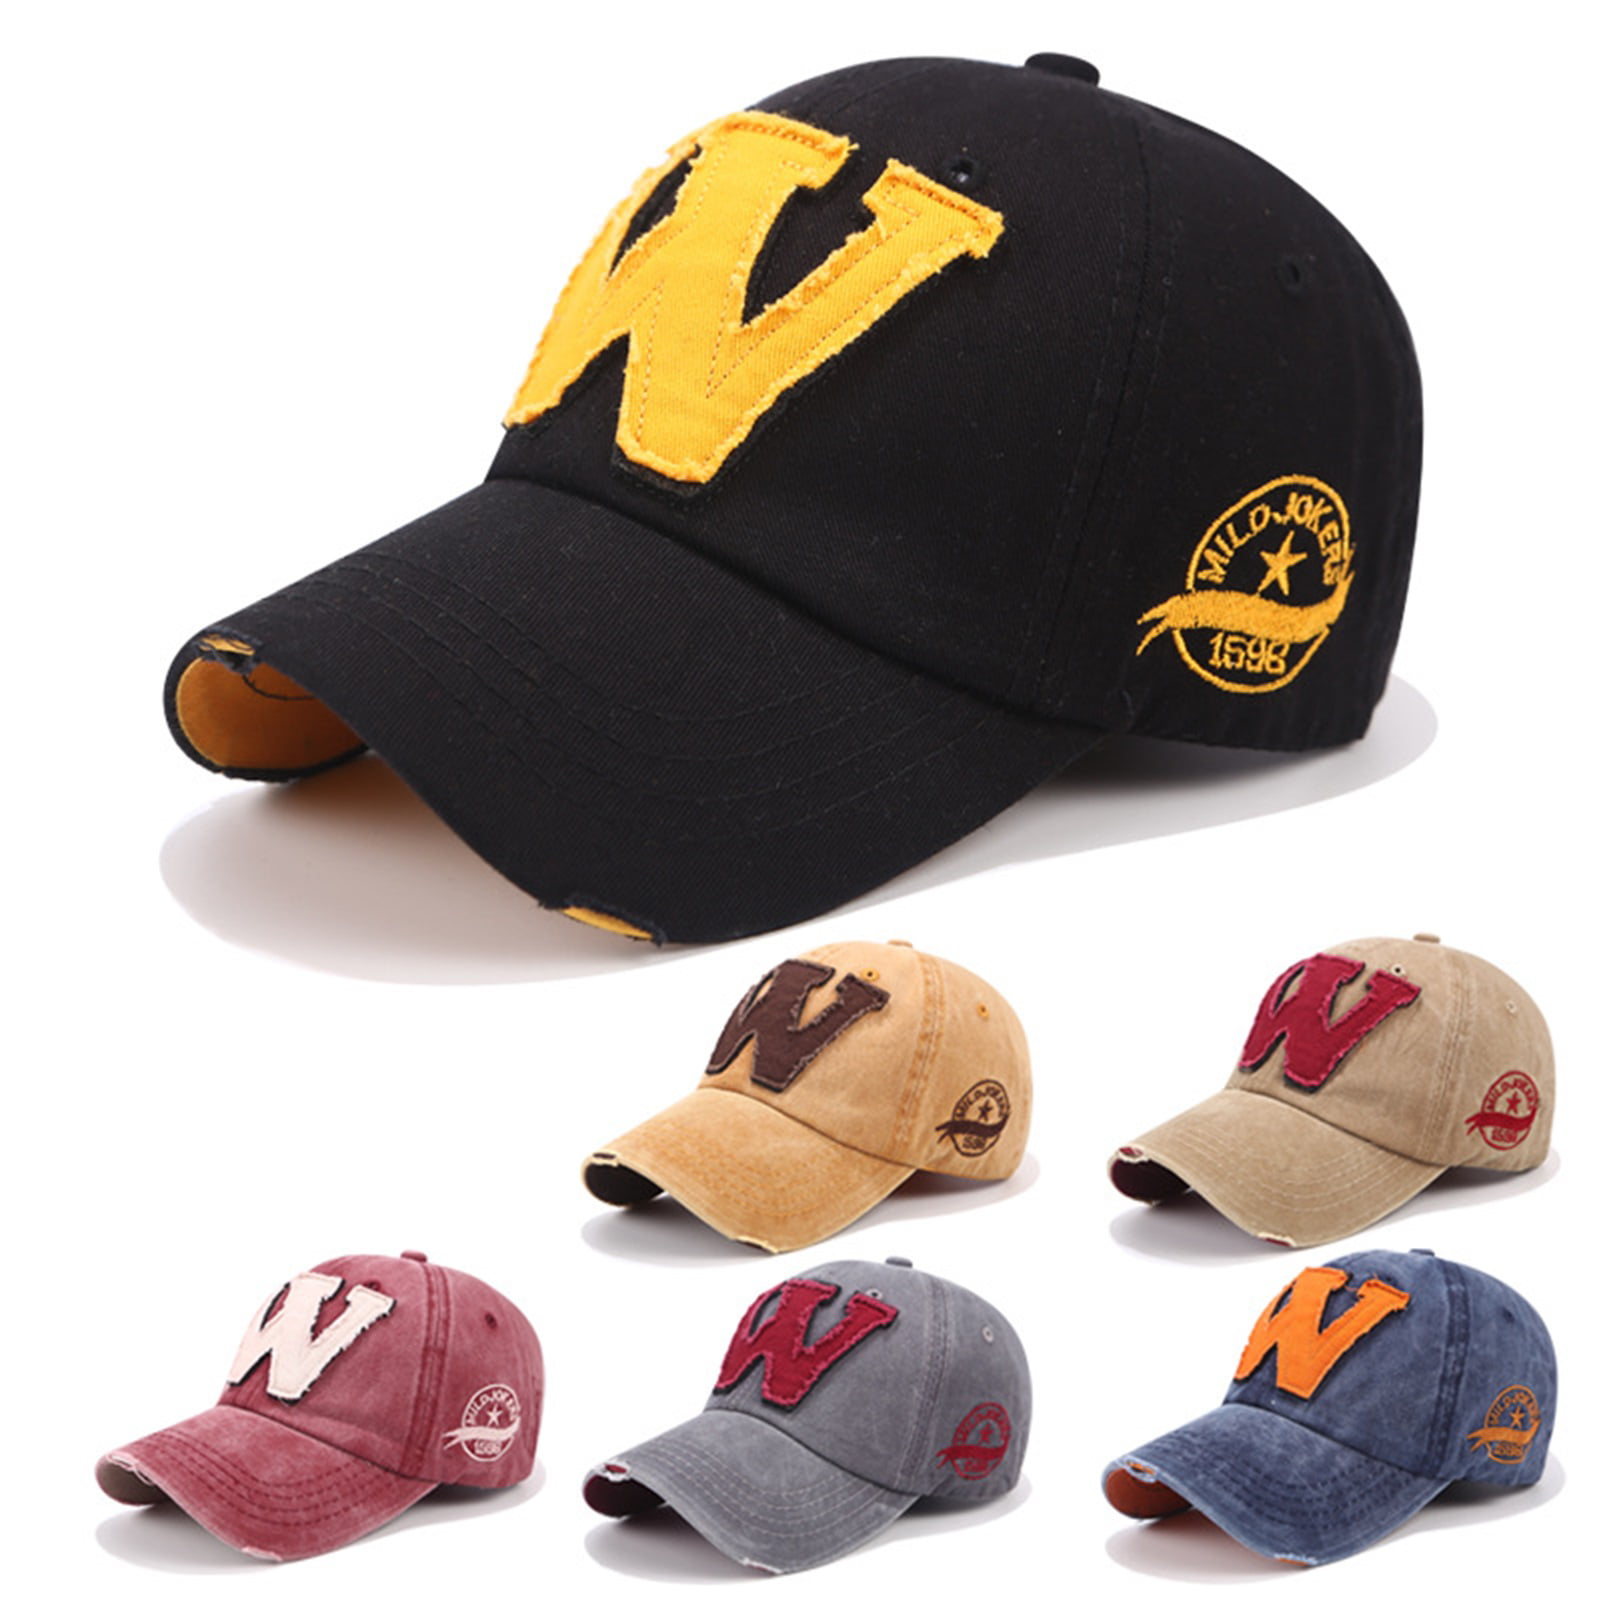 Appliquéd cotton-twill baseball cap